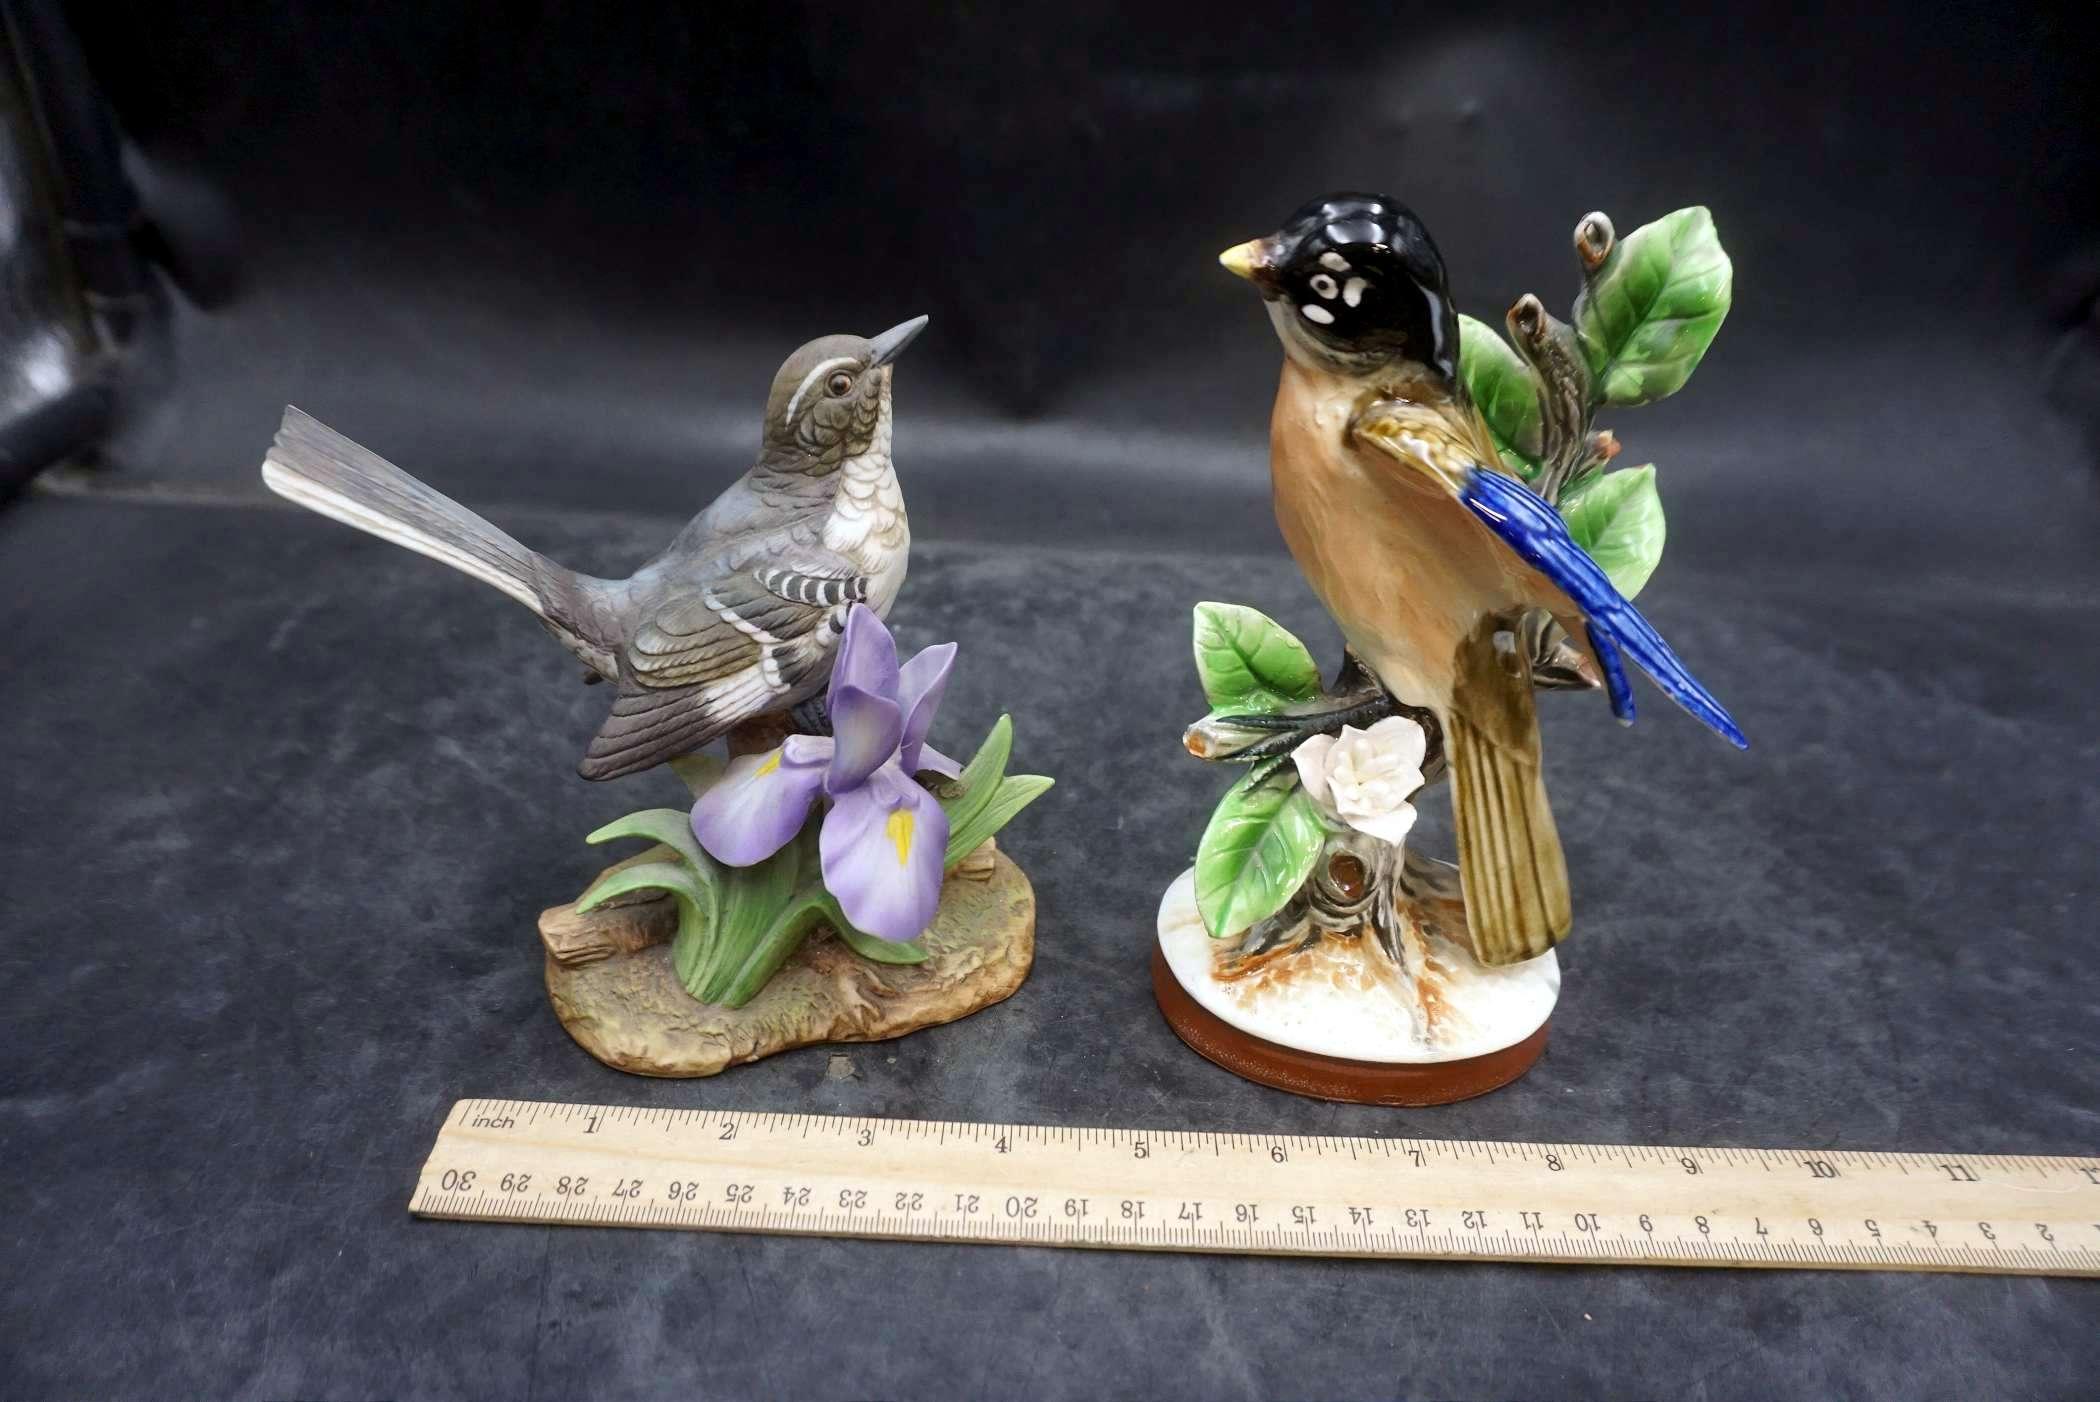 2 Bird Figurines - Andrea by Sadek & Japan Robin